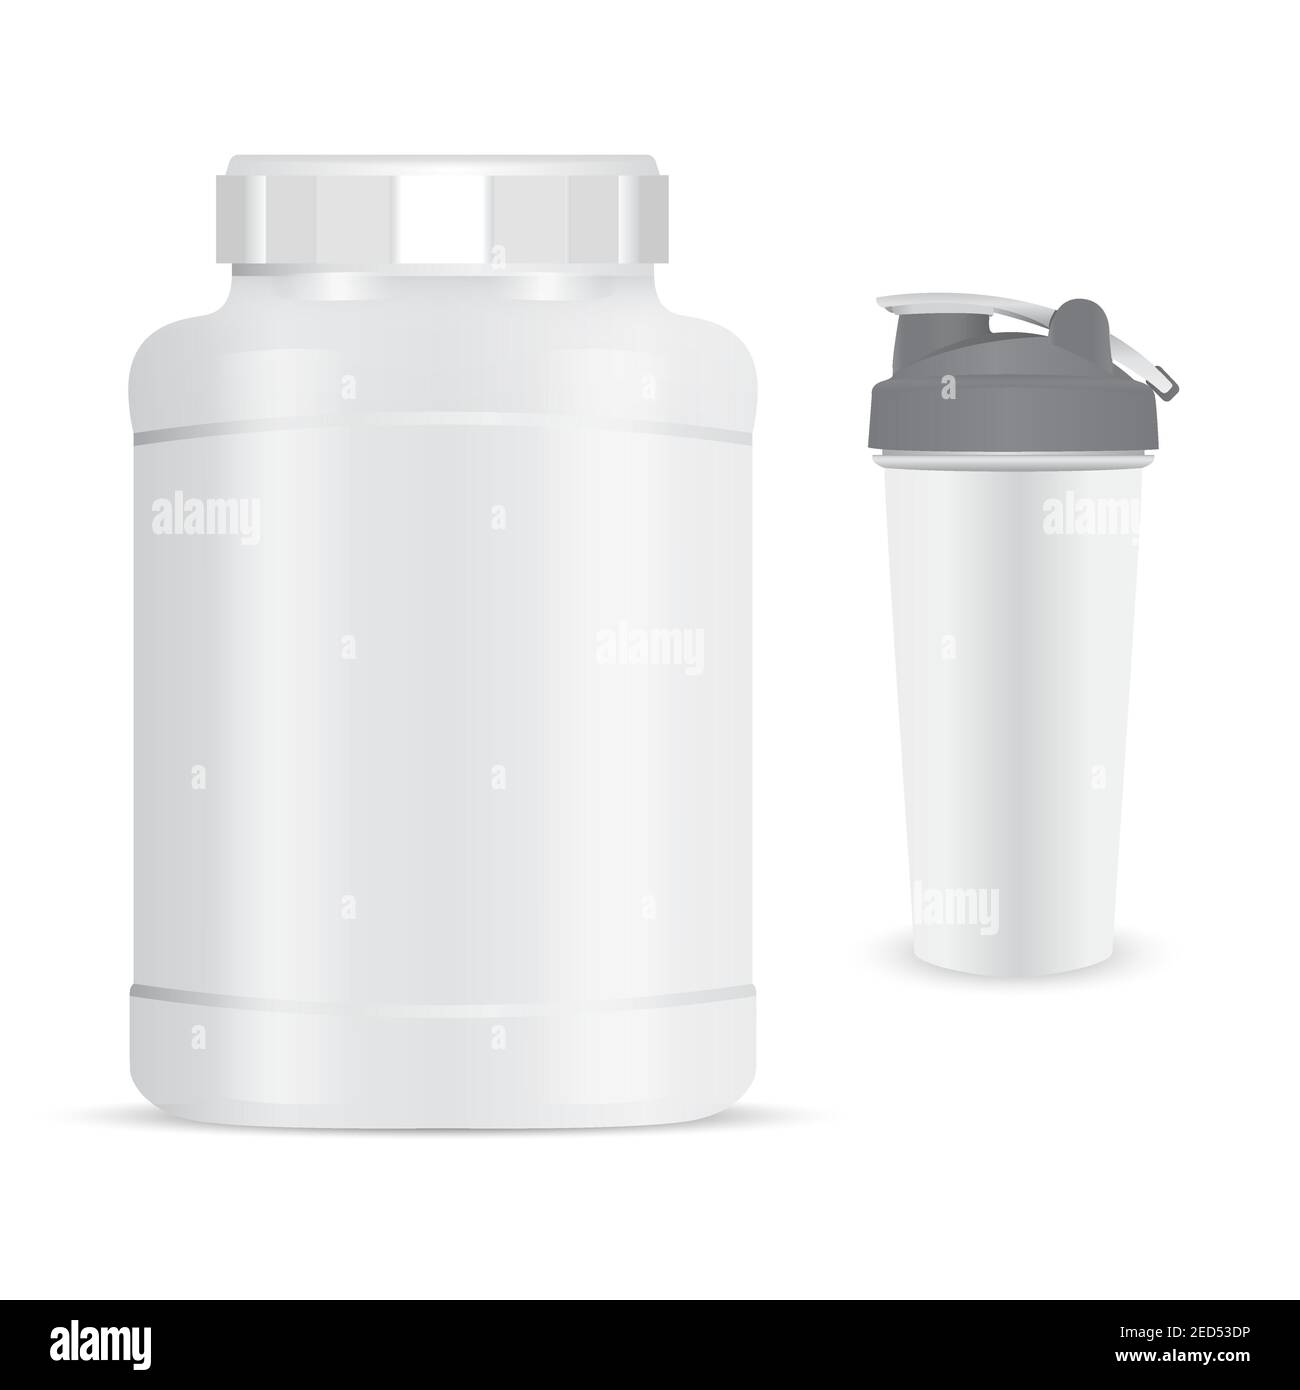 300ml Shaker Bottle Creative Milkshake Protein Mixing Bottle Shake Cup